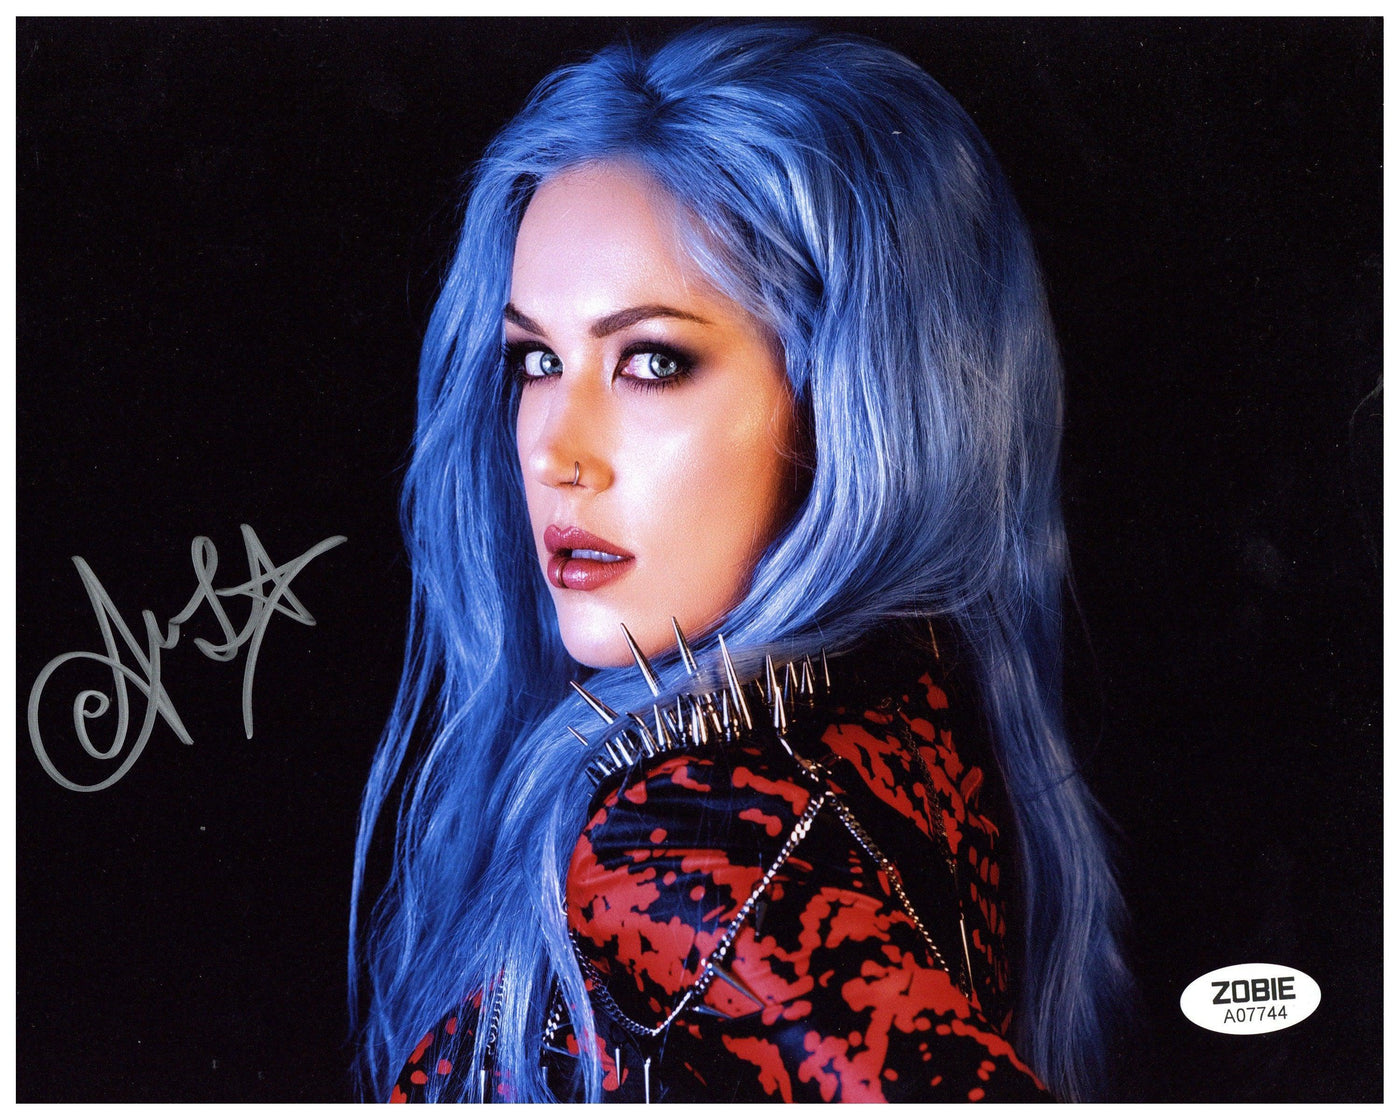 SPECIAL Alissa White-Gluz Signed 8x10 Photo Arch Enemy Singer Autographed Zobie COA #3